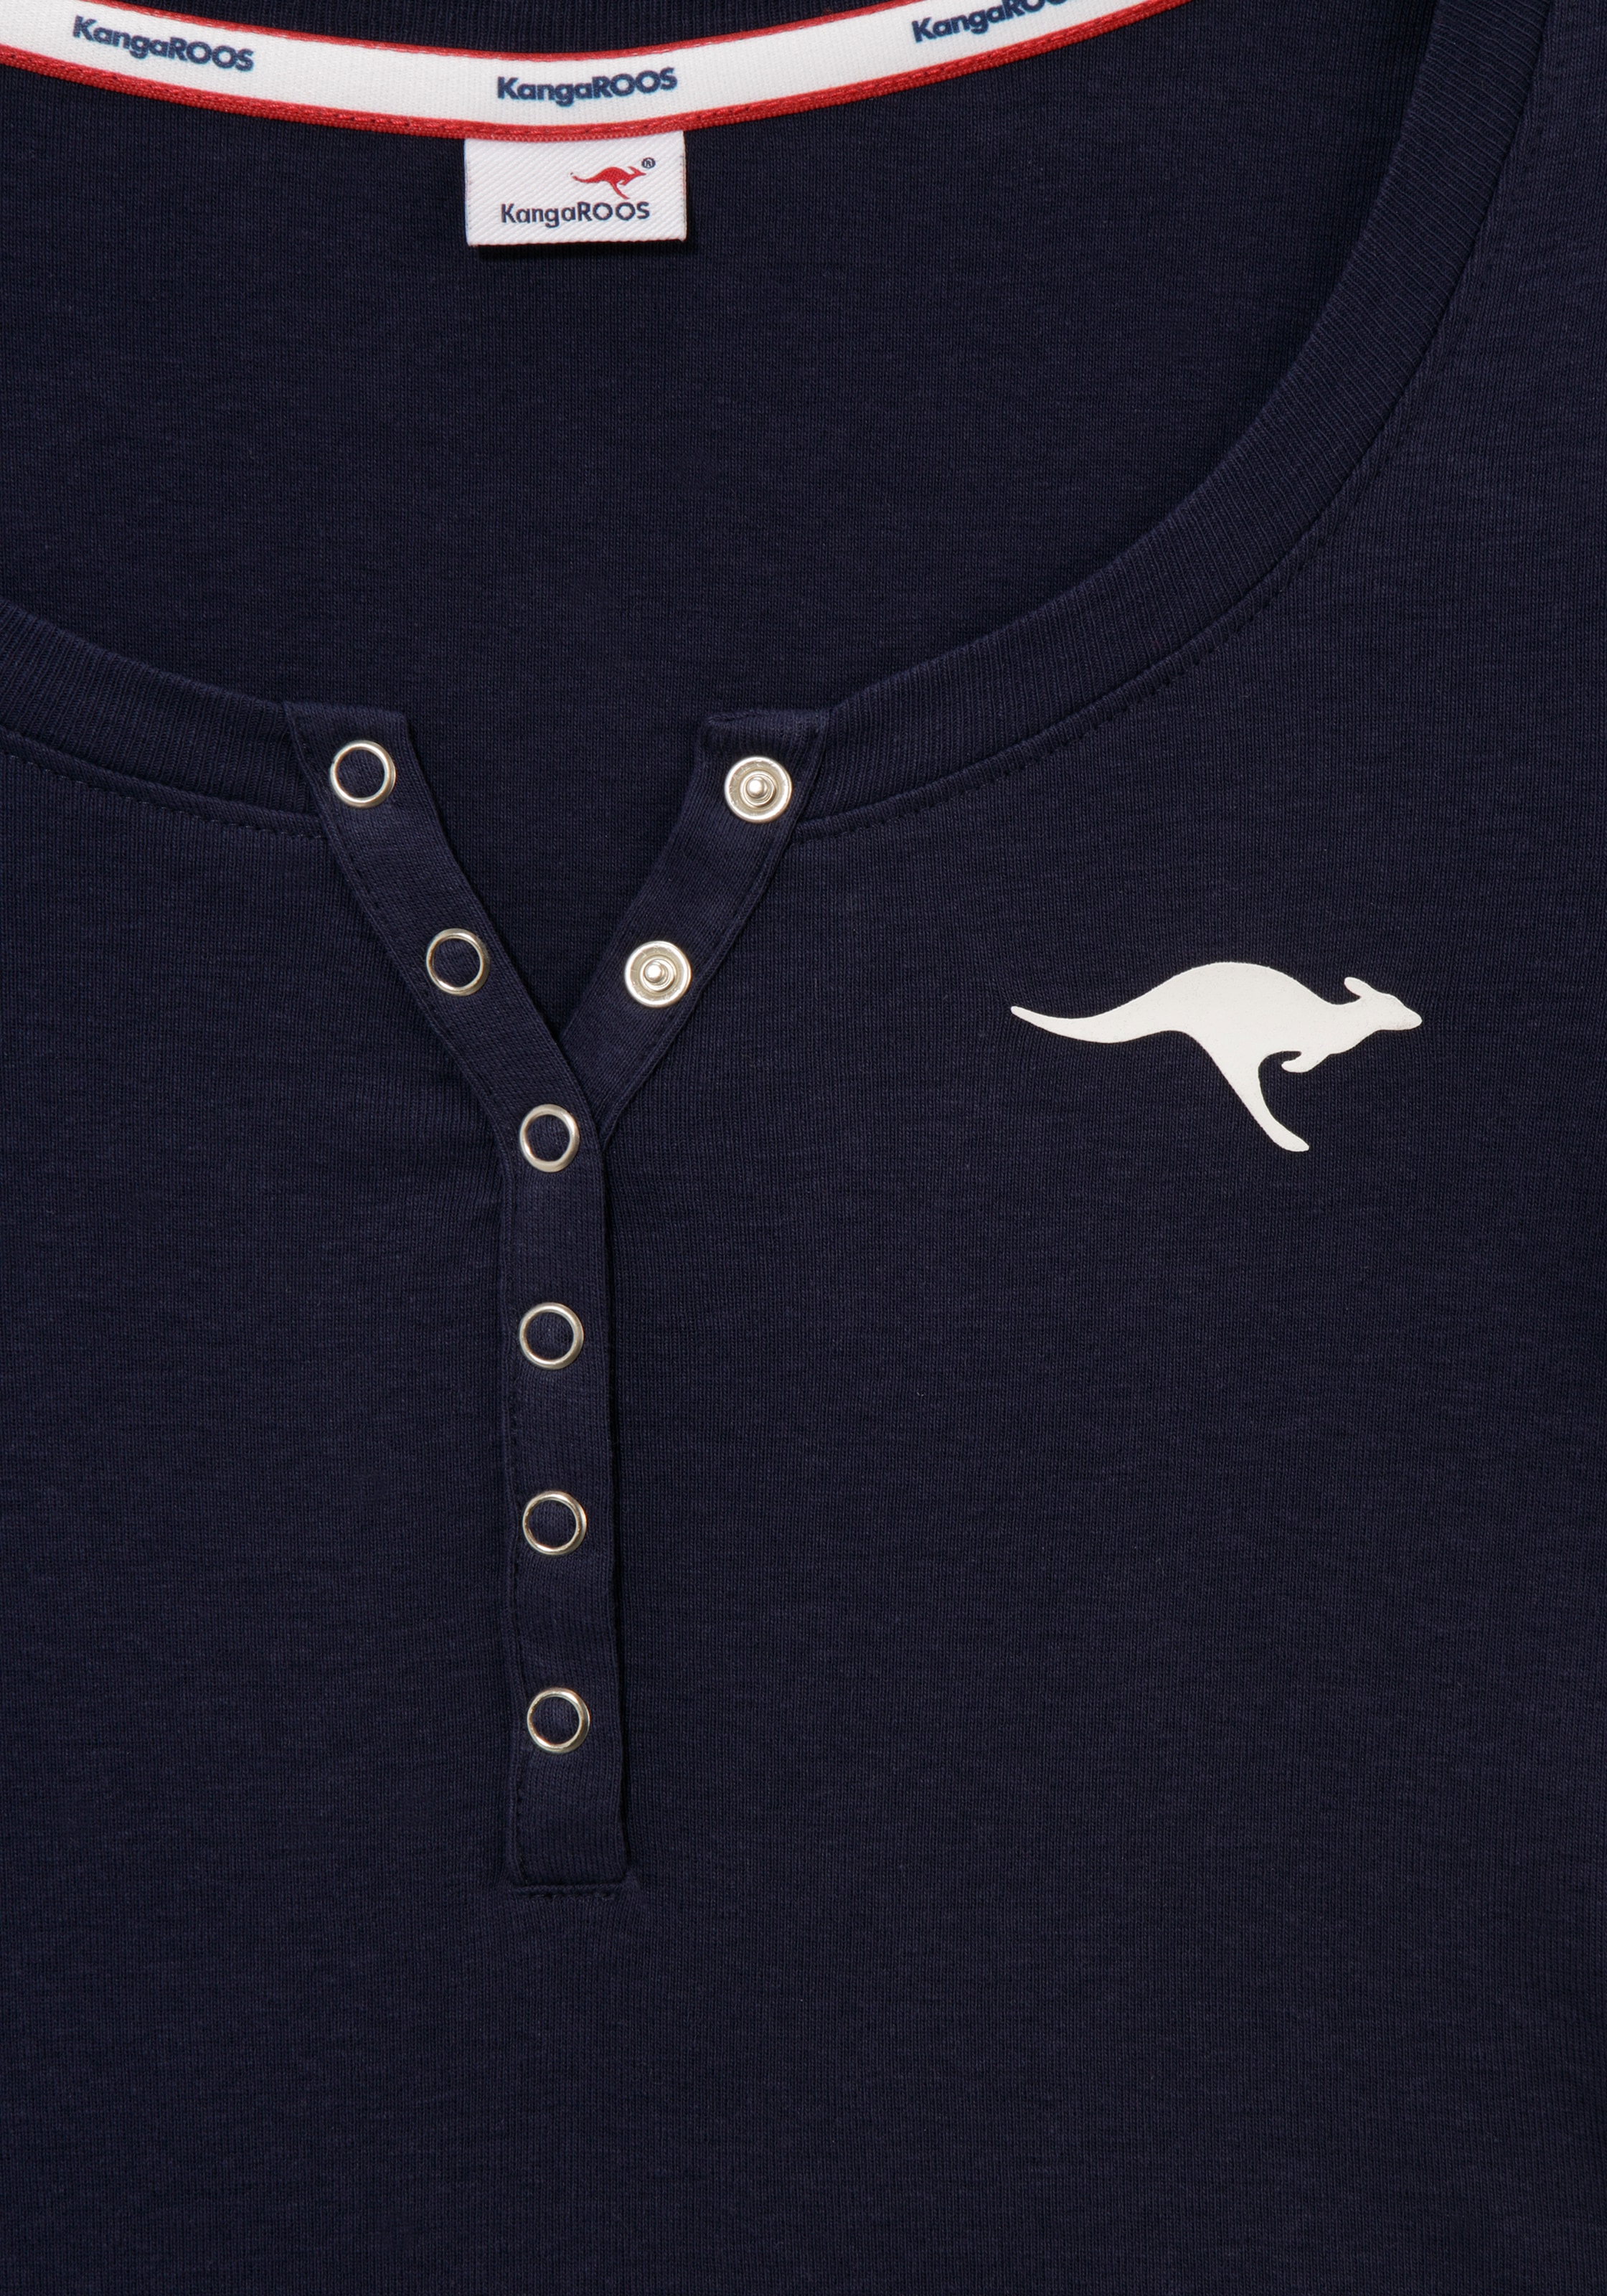 Black Friday KangaROOS Langarmshirt, Känguru-Logodruck | BAUR Knopfleiste mit und